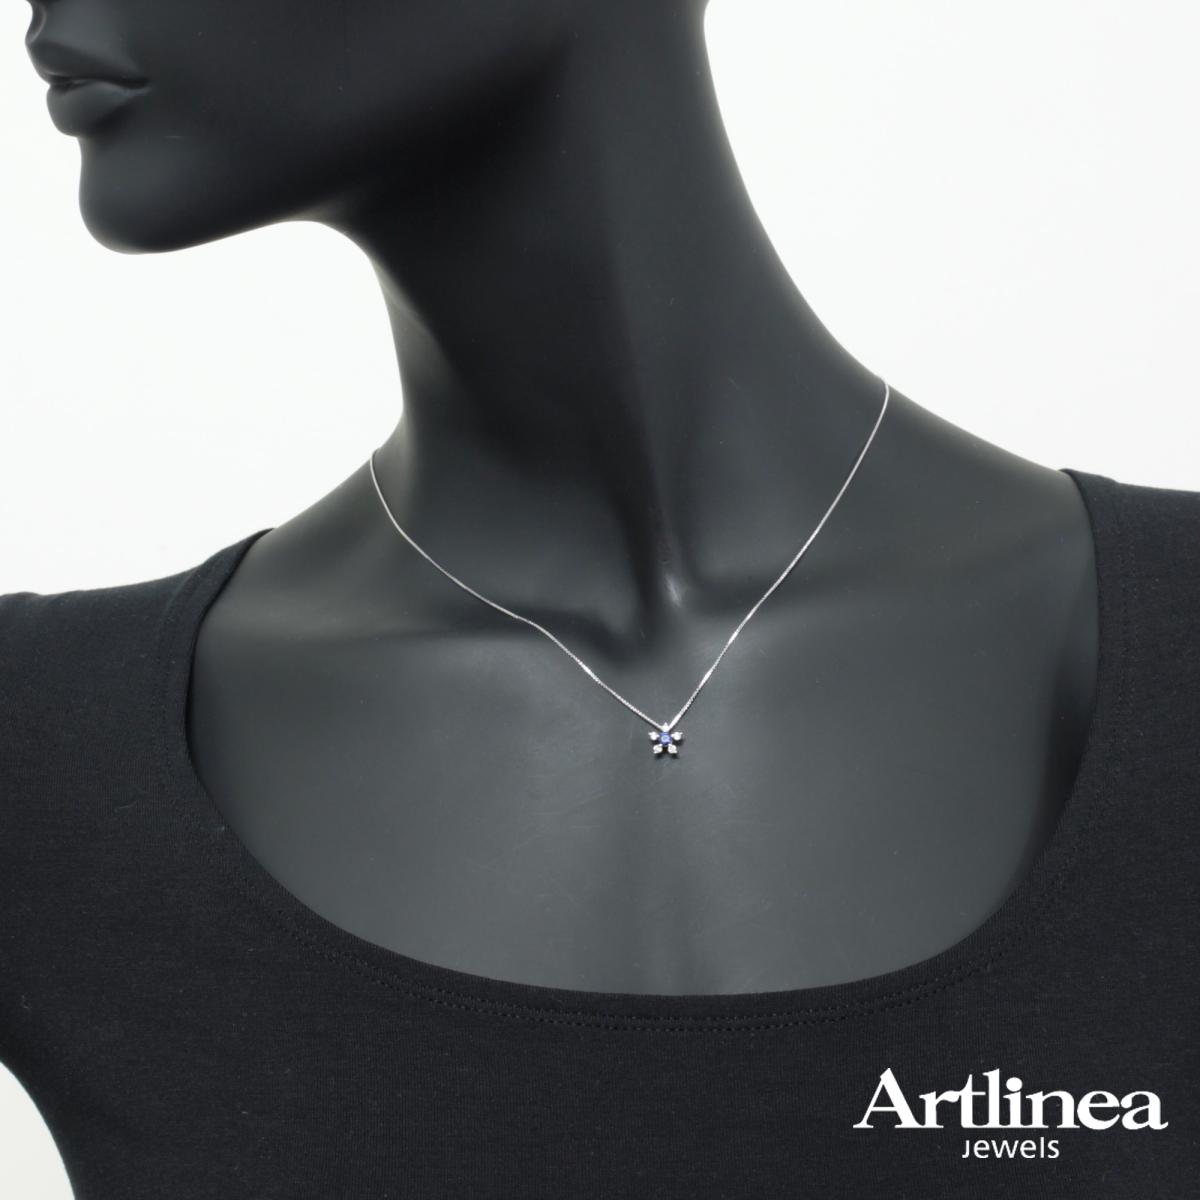 Multi-stone necklace with diamonds